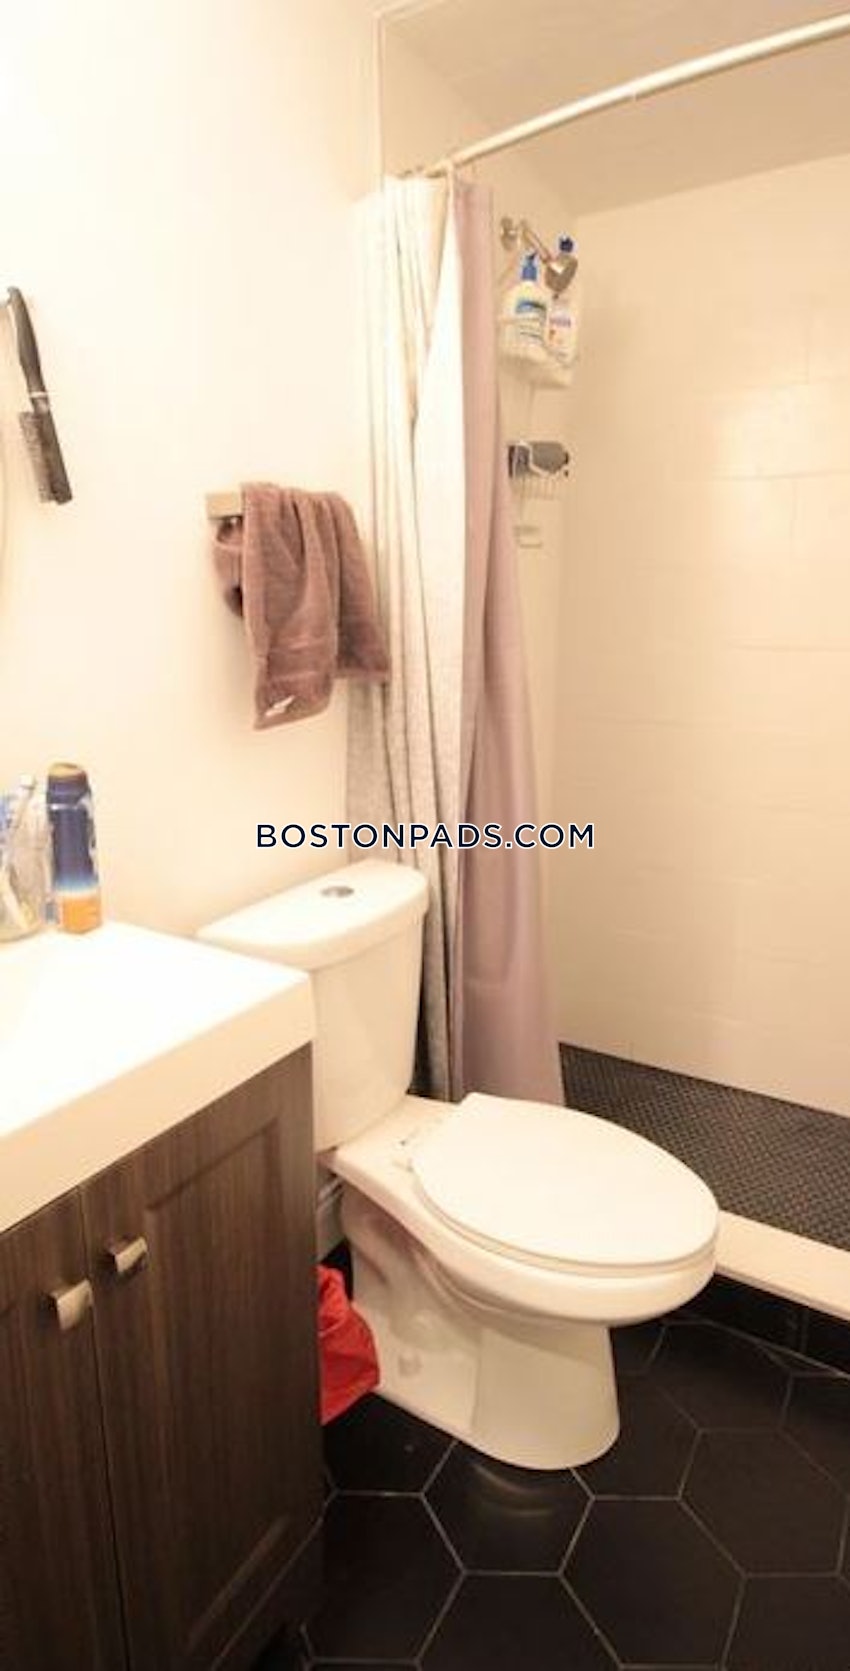 BOSTON - NORTHEASTERN/SYMPHONY - 5 Beds, 2 Baths - Image 2